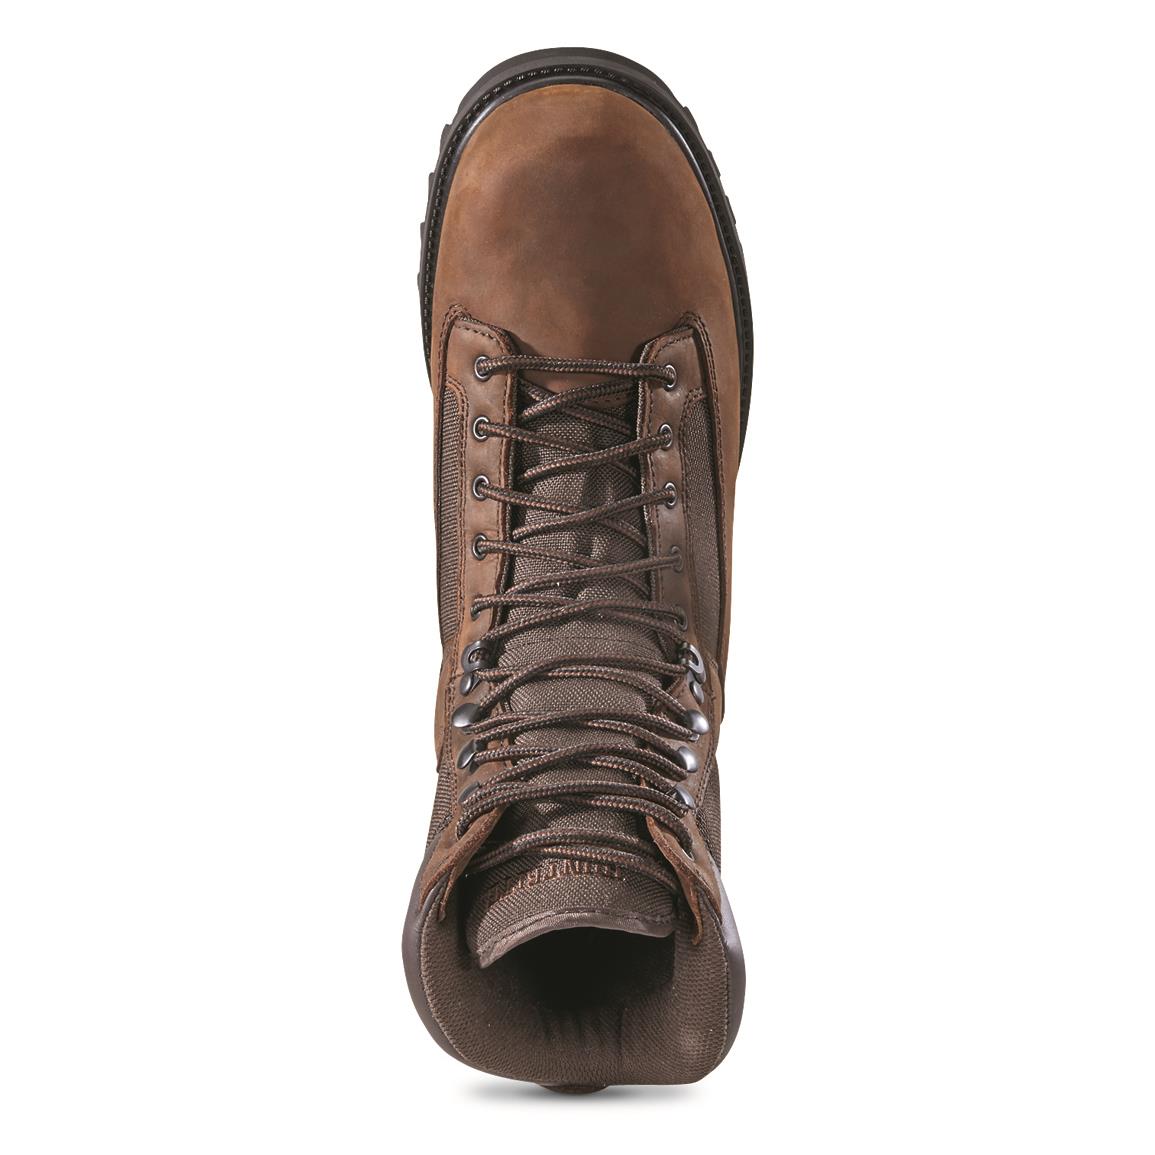 HuntRite Men's Insulated Waterproof Hunting Boots, 1,200-gram - 704101 ...